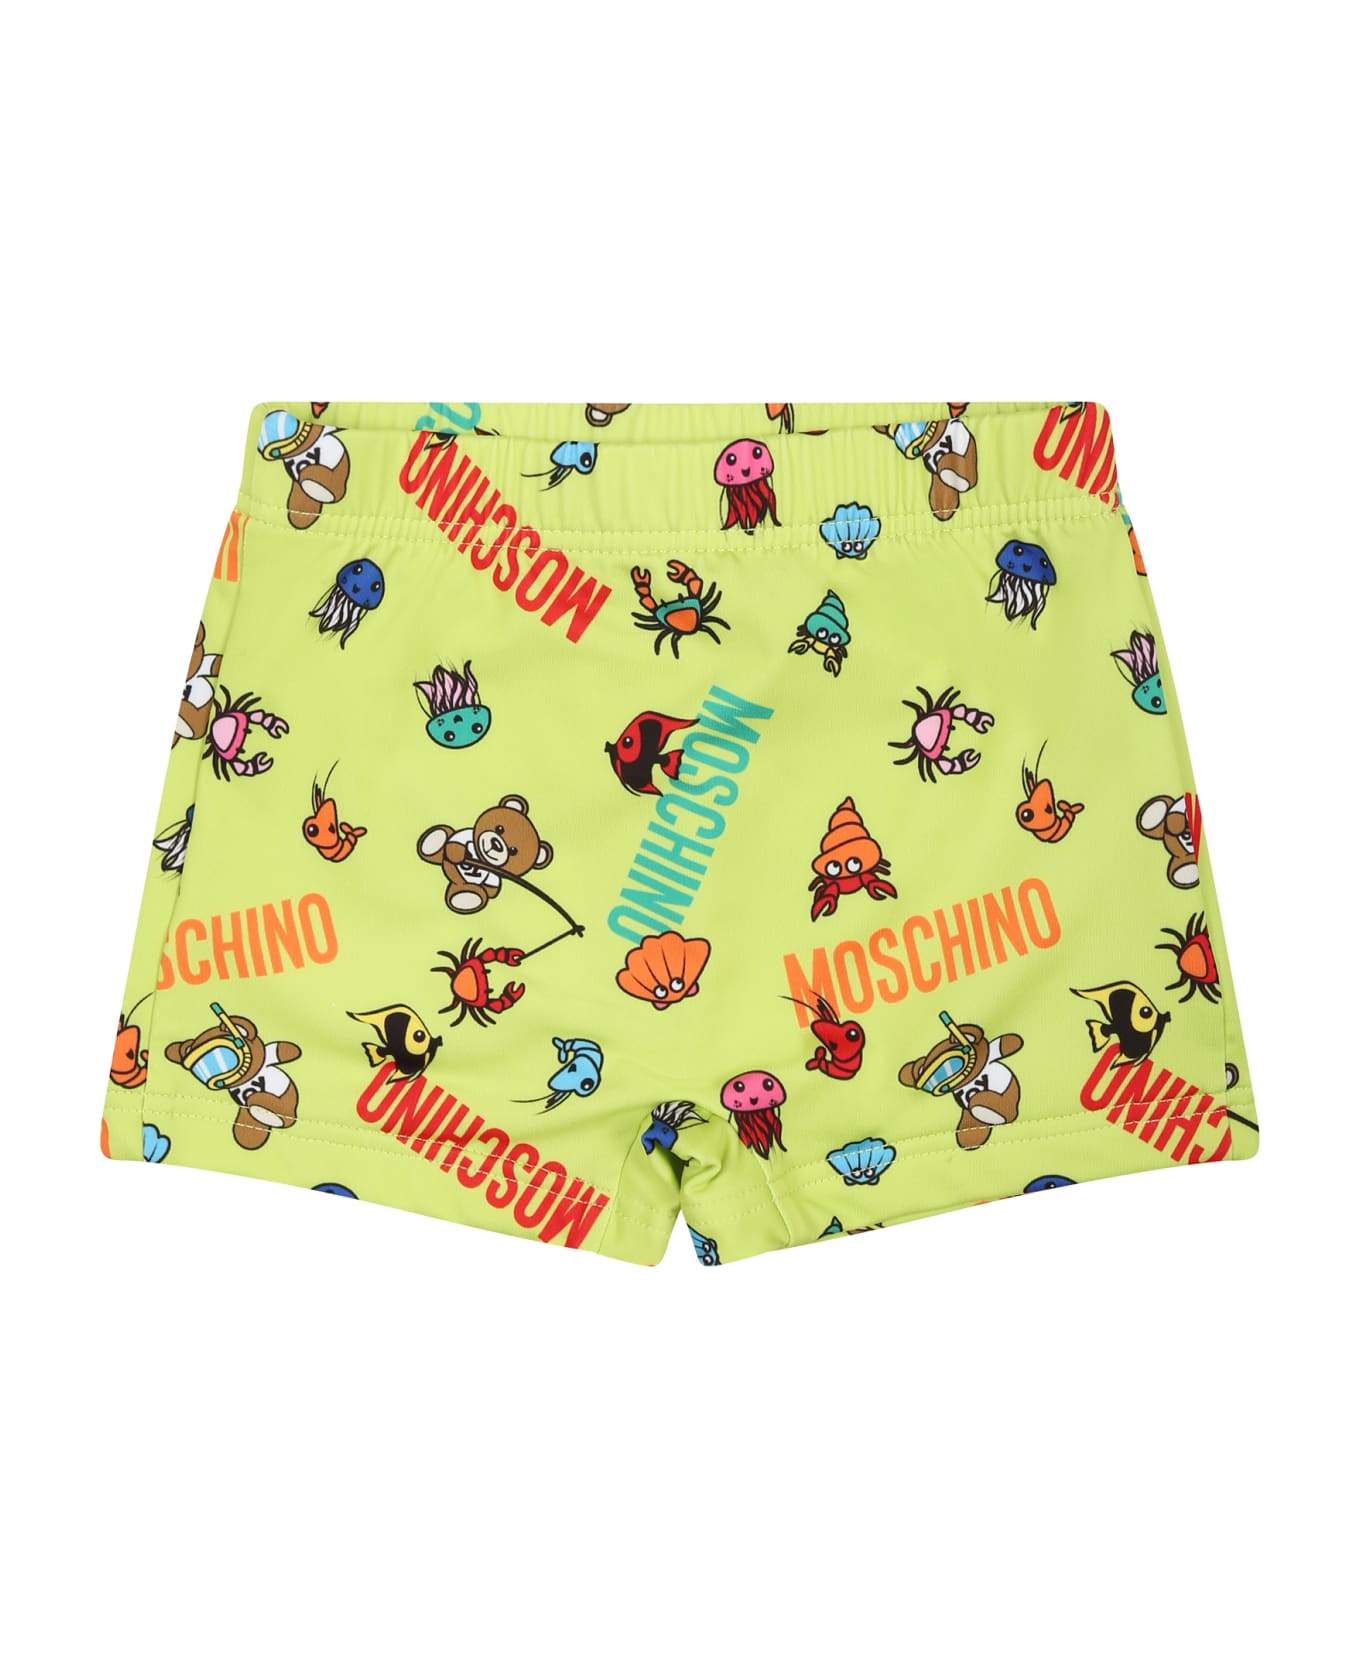 Moschino Green Swim Shorts For Baby Boy With Marine Animals And Logo - Green 水着